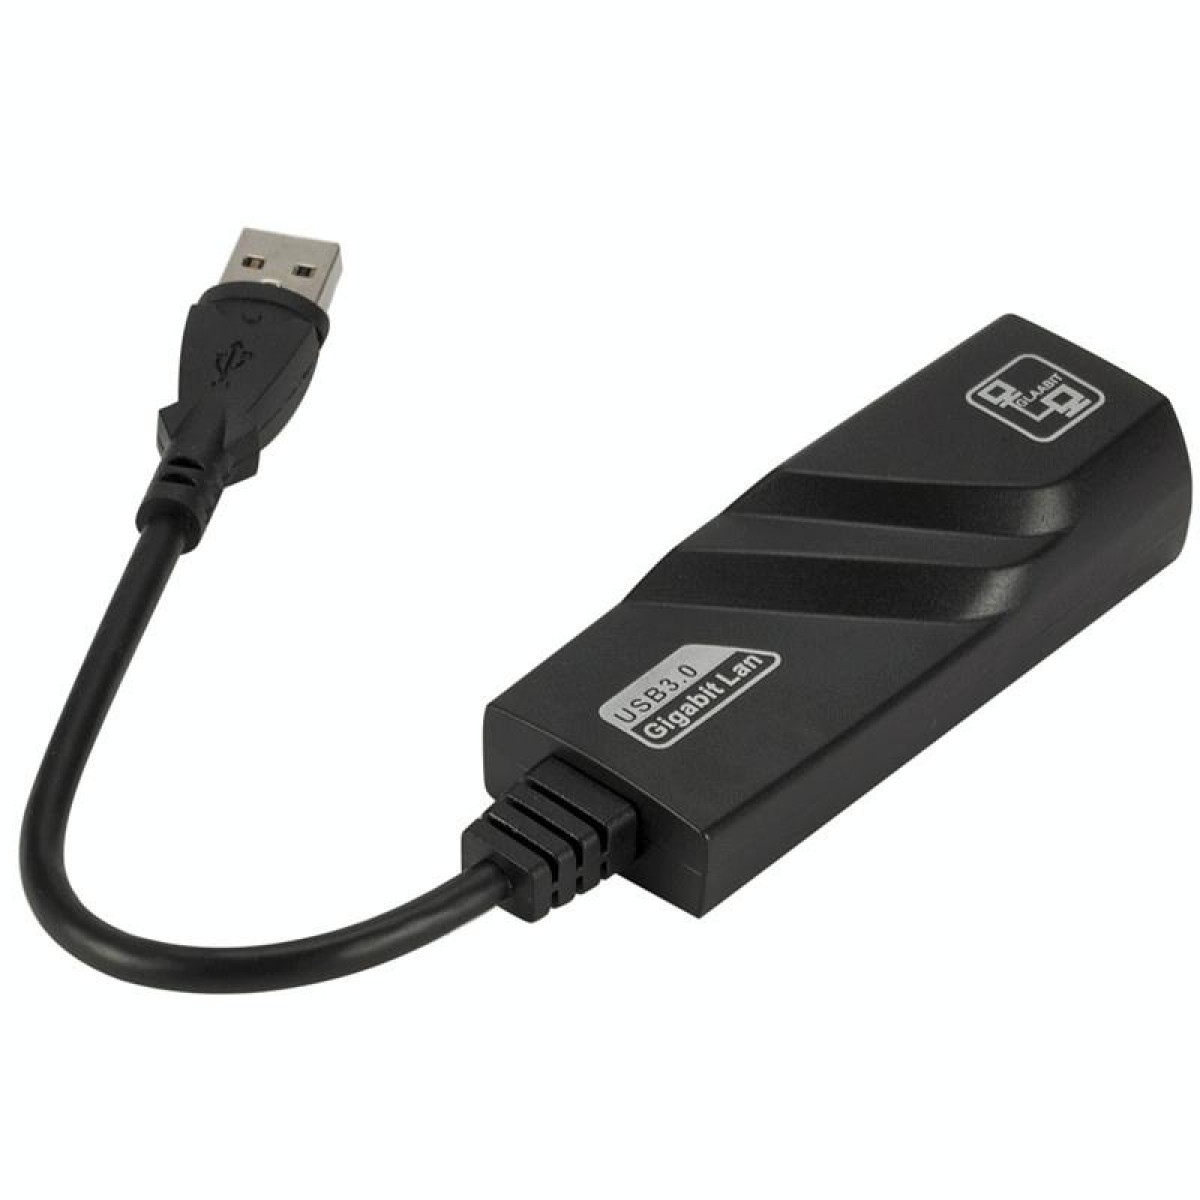 10/100/1000 Mbps RJ45 to USB 3.0 External Gigabit Network Card, Support WIN10